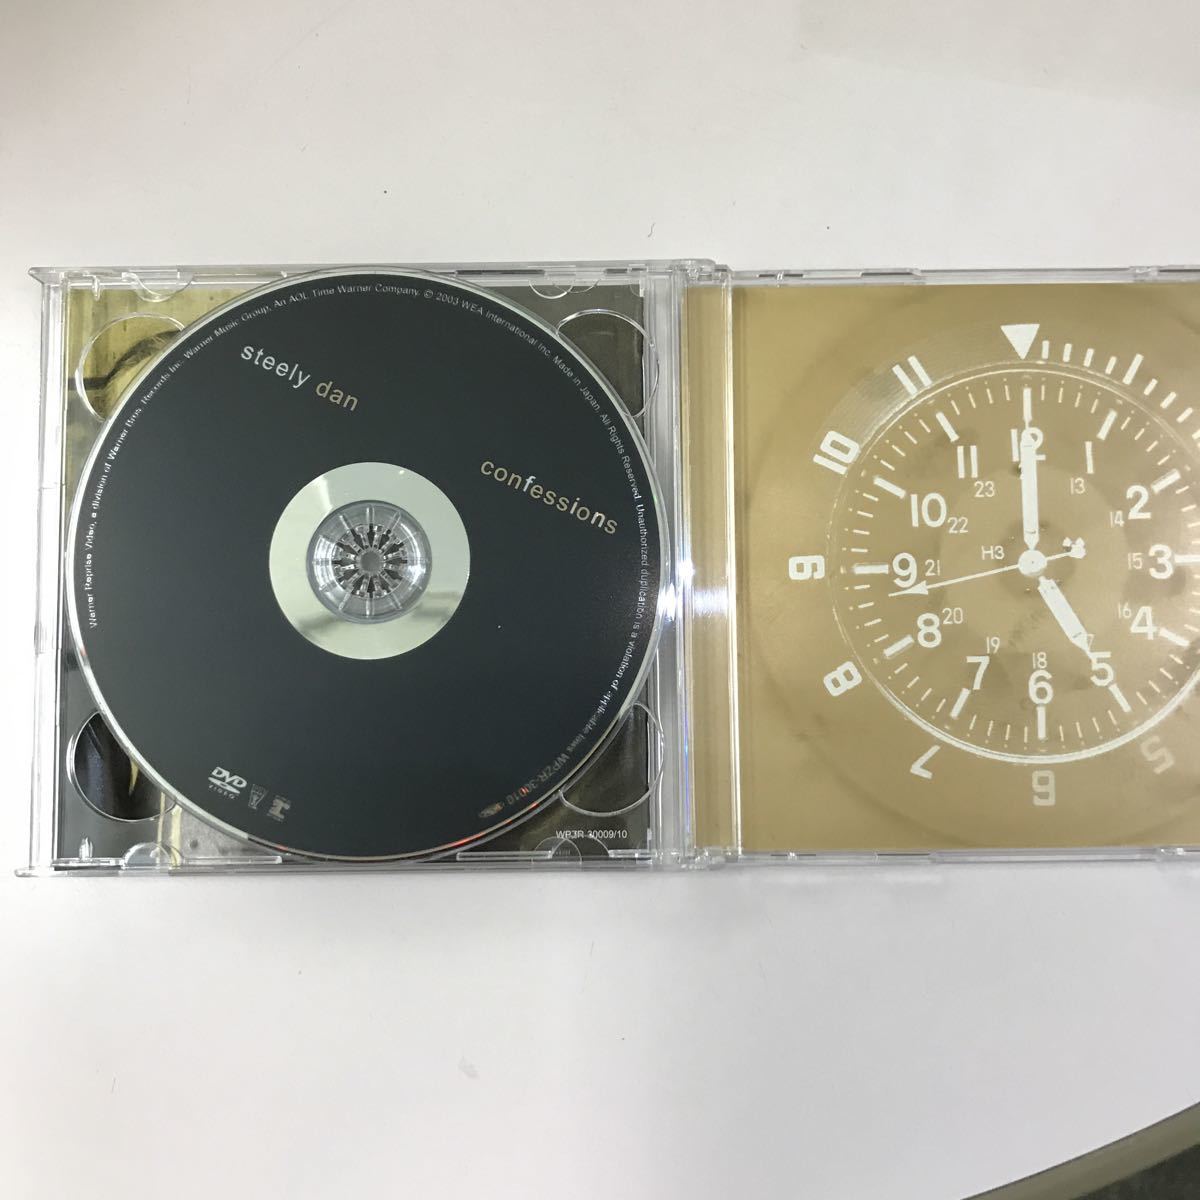 CD プラスDVD中古【洋楽】長期保存品 スティーリー・ダン